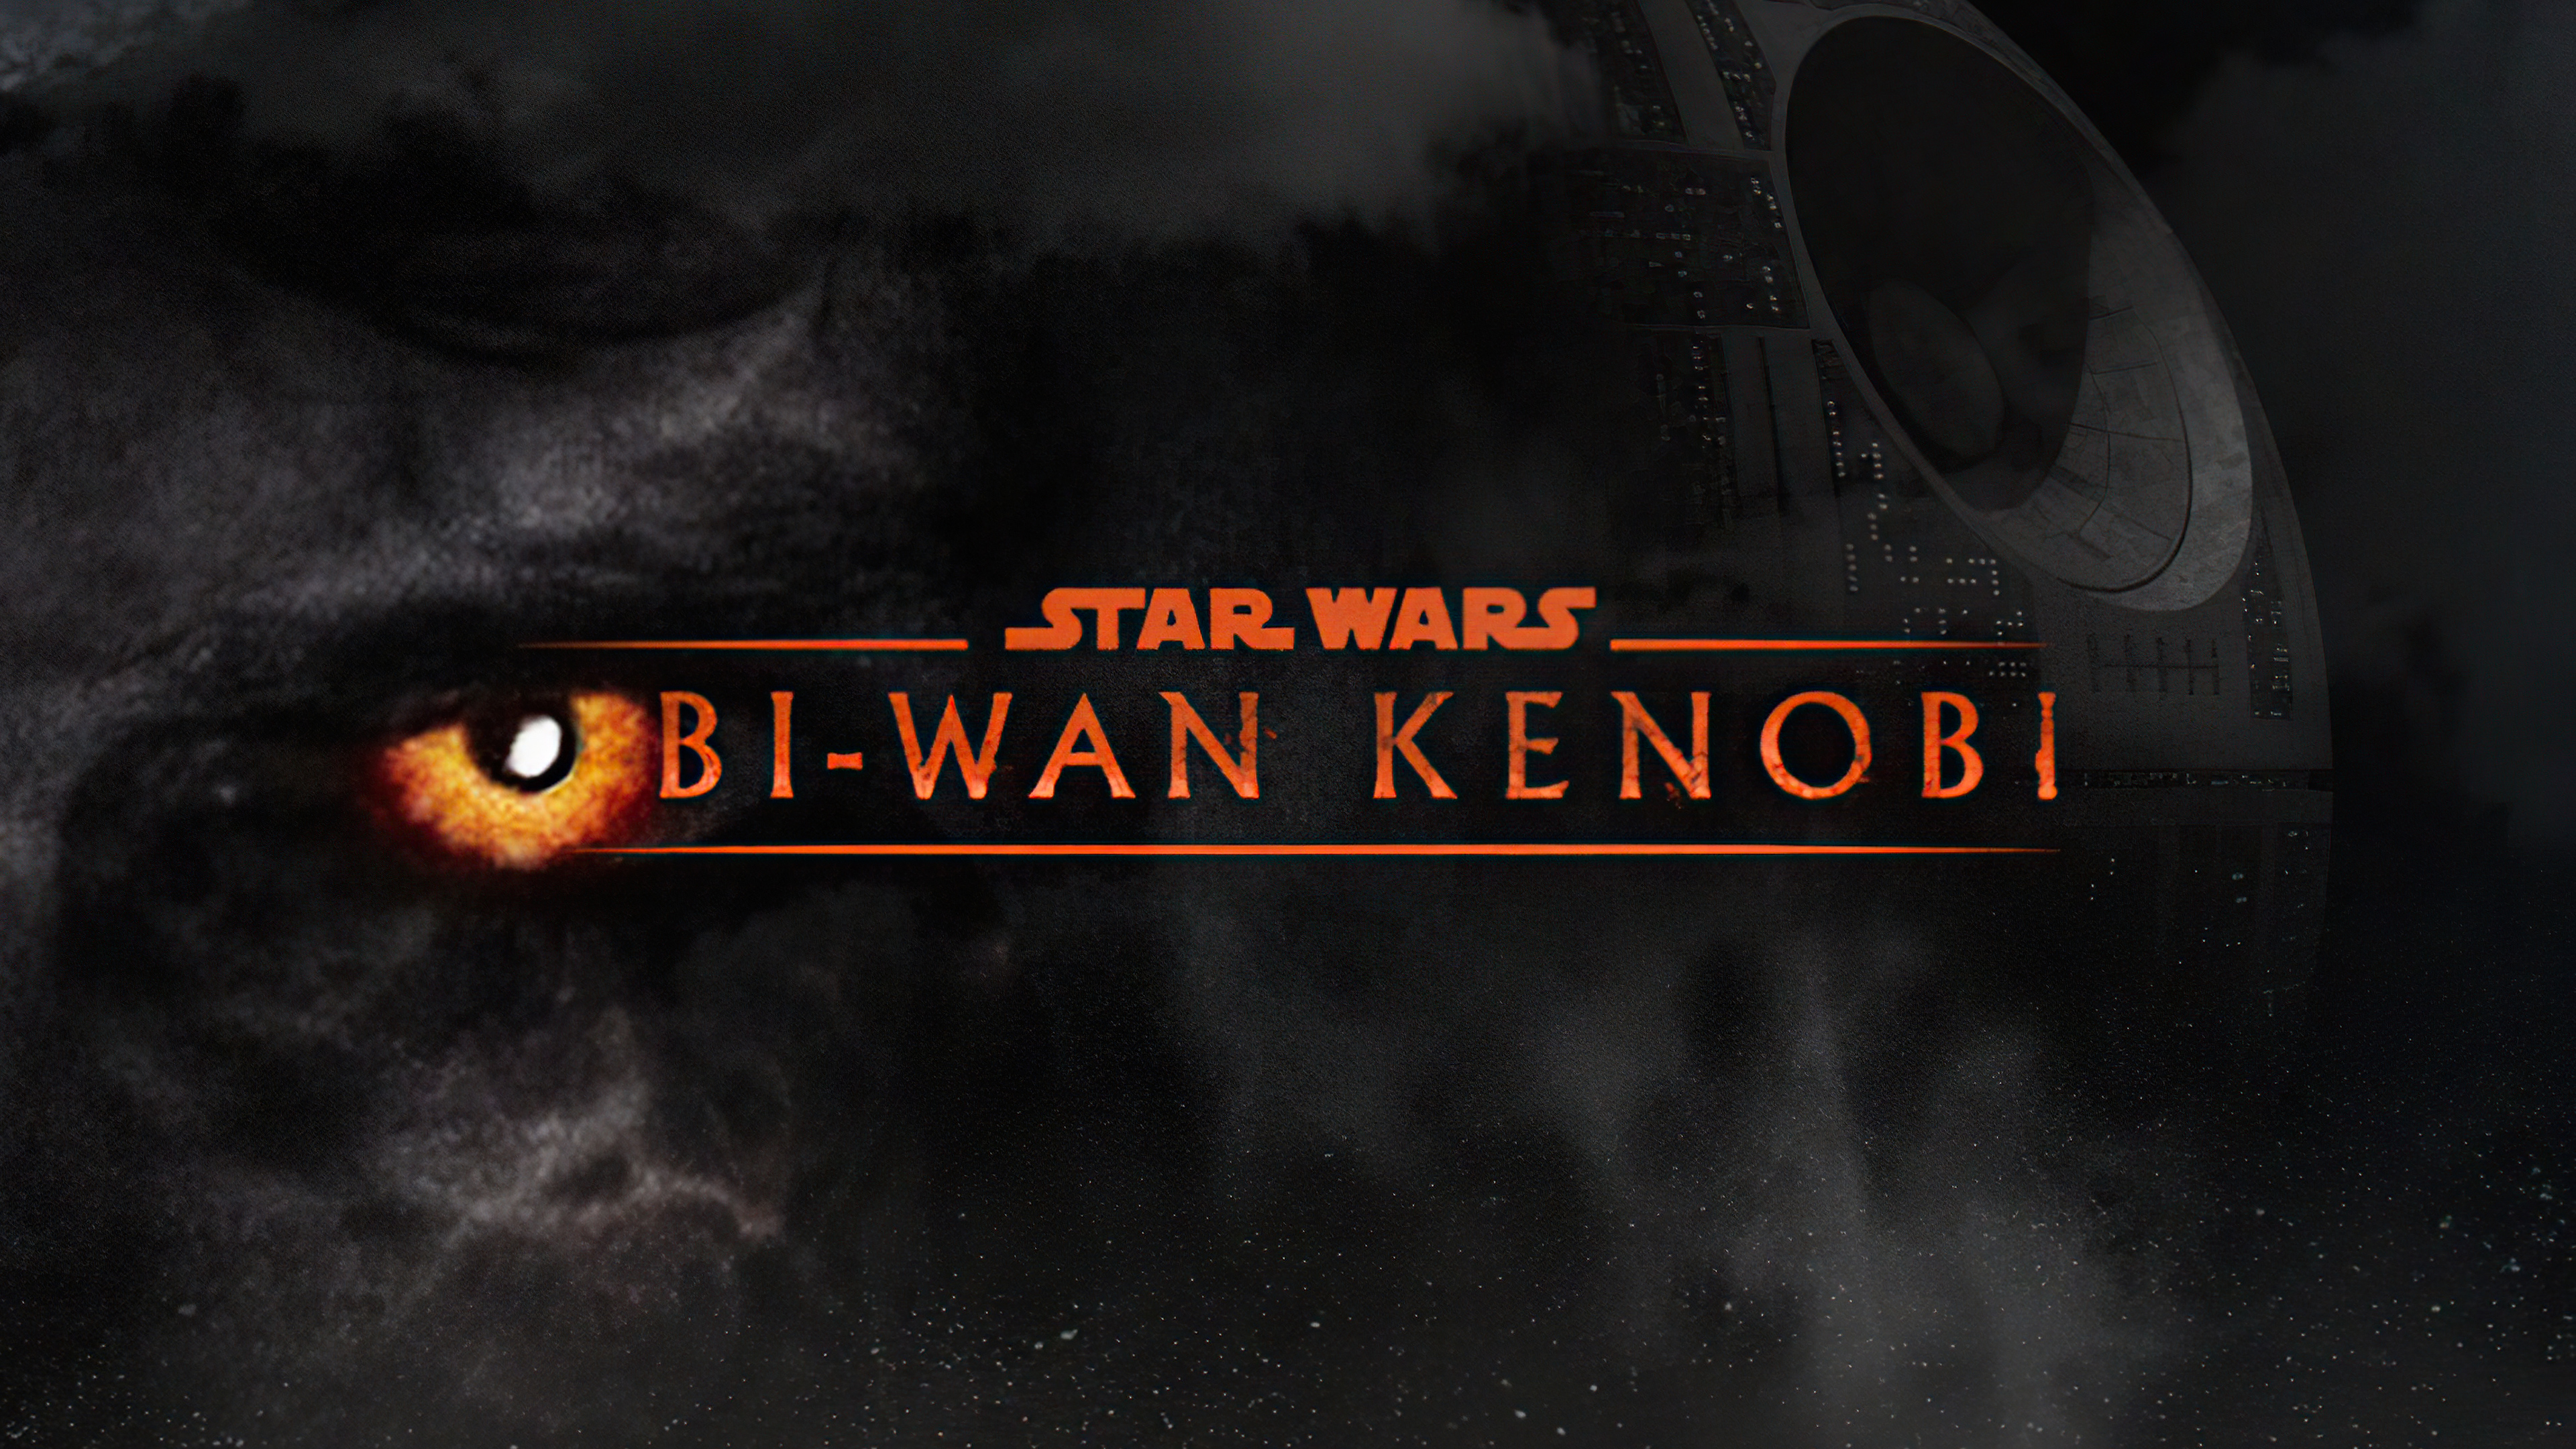 Star Wars Obi Wan Kenobi HD Tv Shows, 4k Wallpaper, Image, Background, Photo and Picture